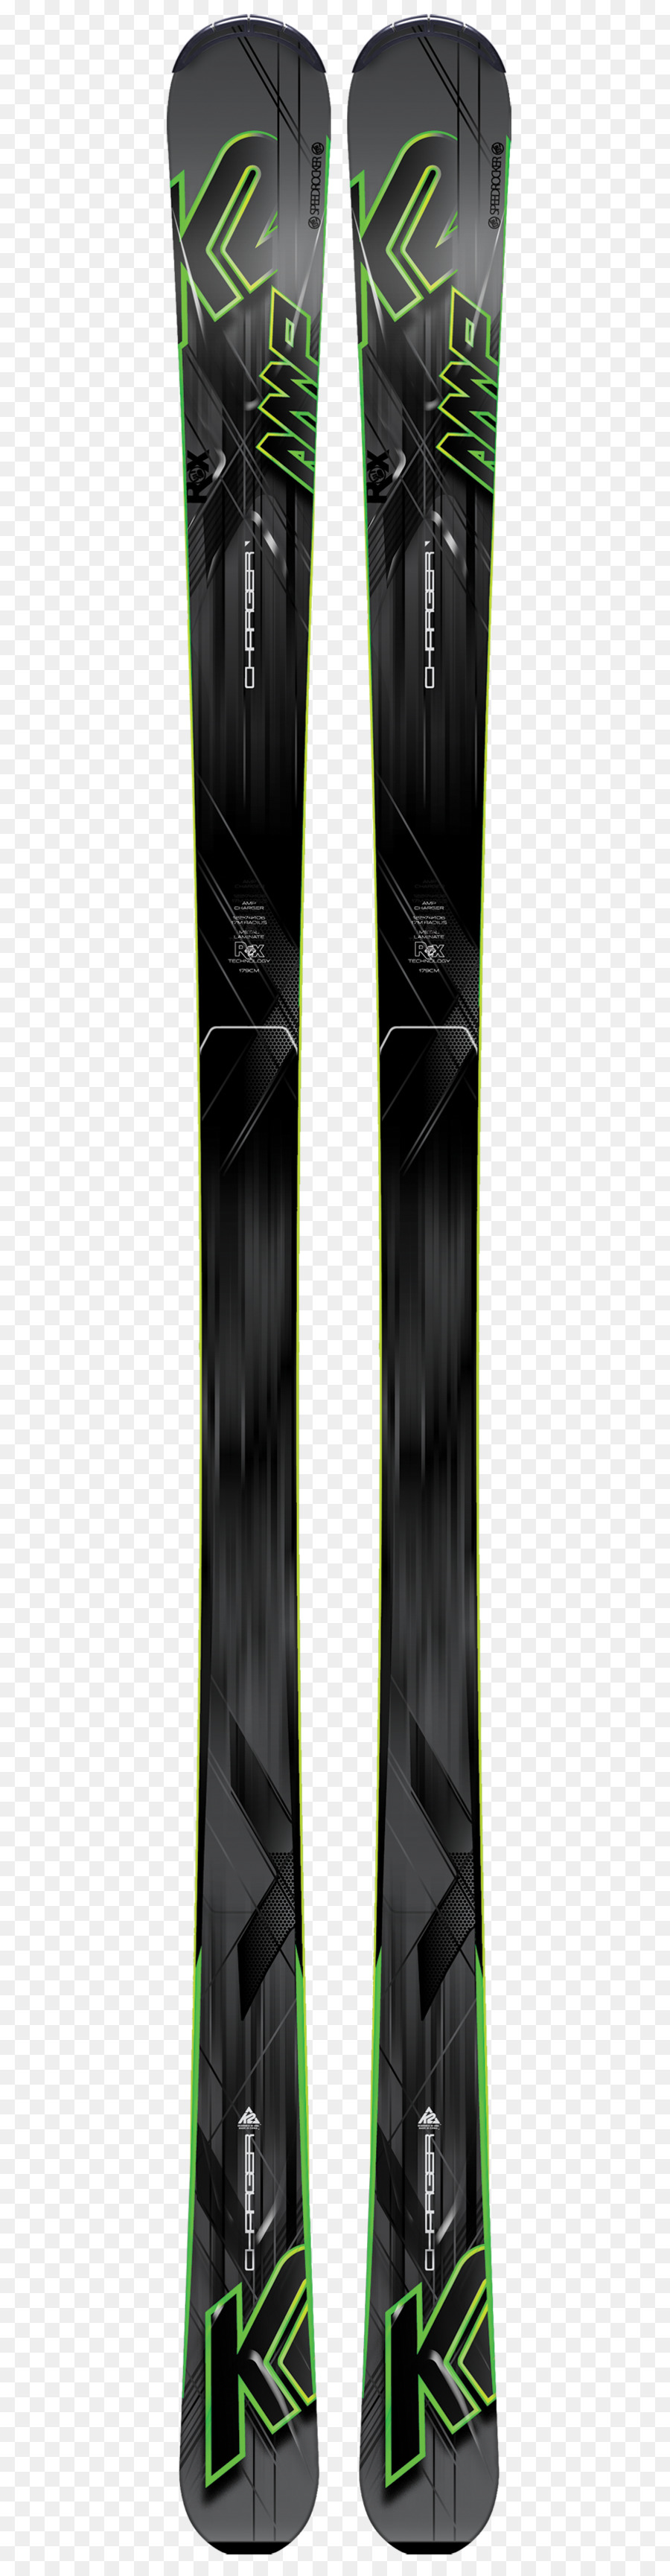 Articoli sportivi Skiset K2 Sport caricabatterie - sci